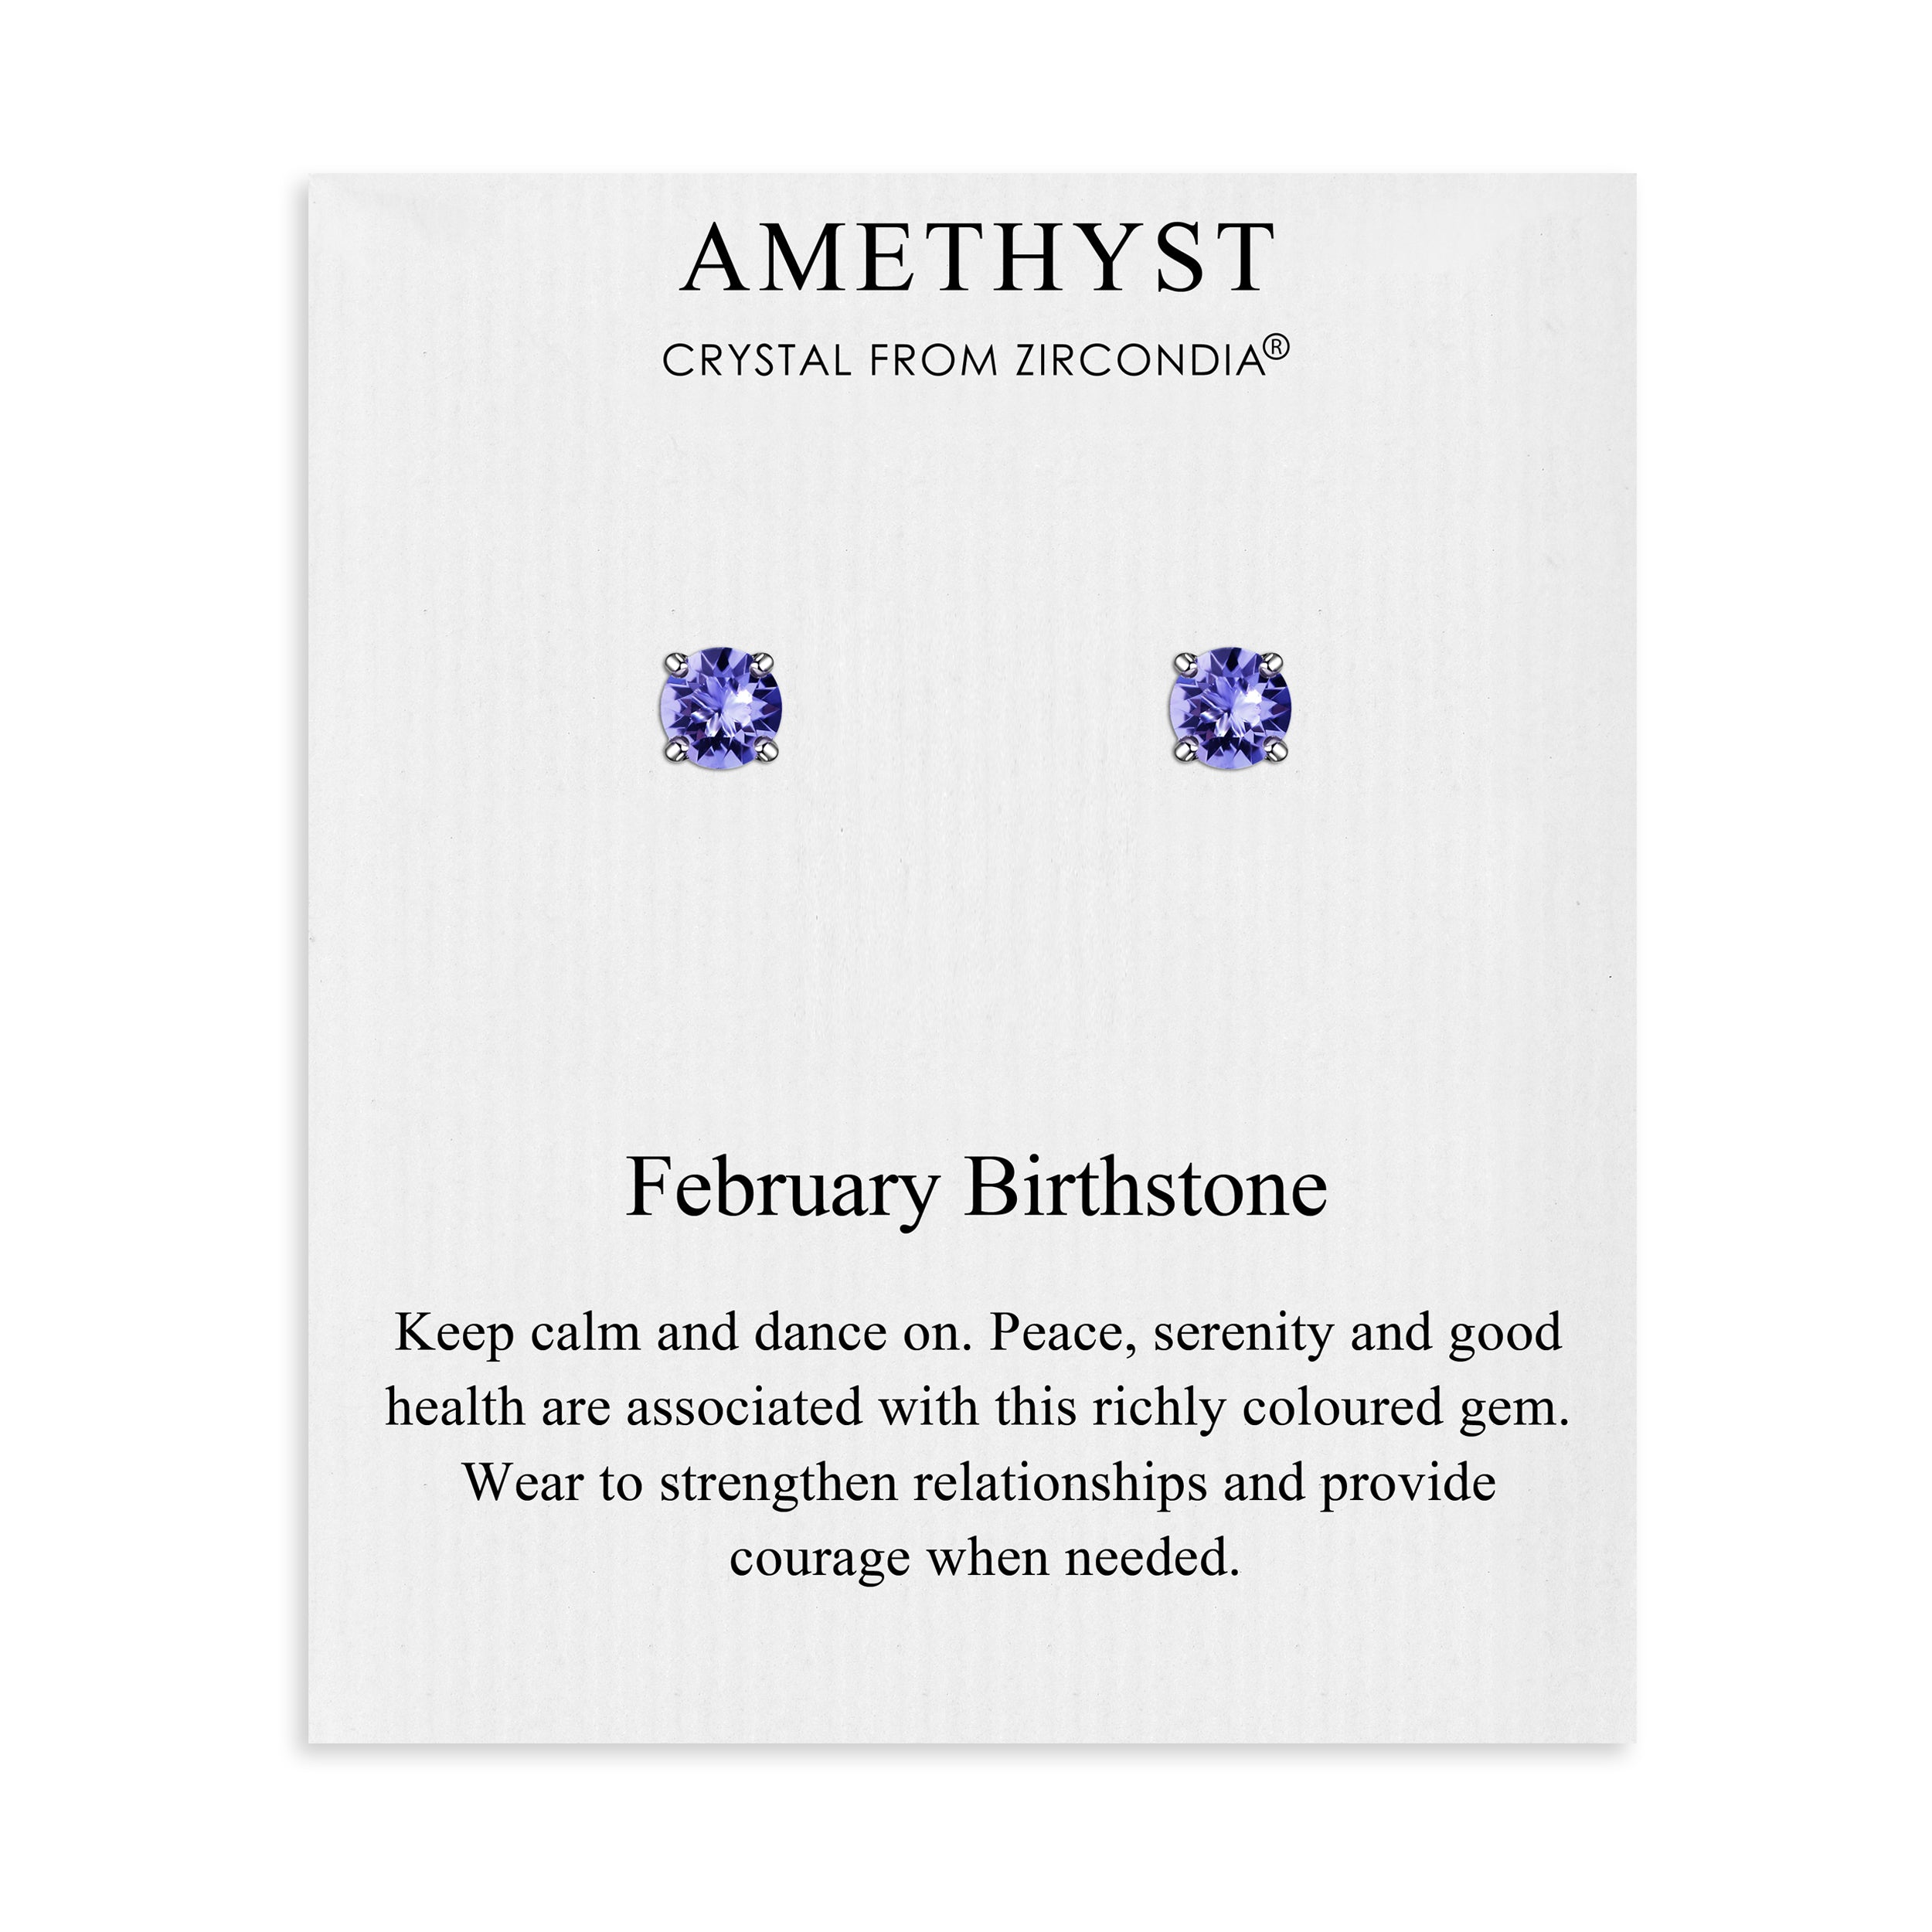 February (Amethyst) Birthstone Earrings Created with Zircondia® Crystals by Philip Jones Jewellery